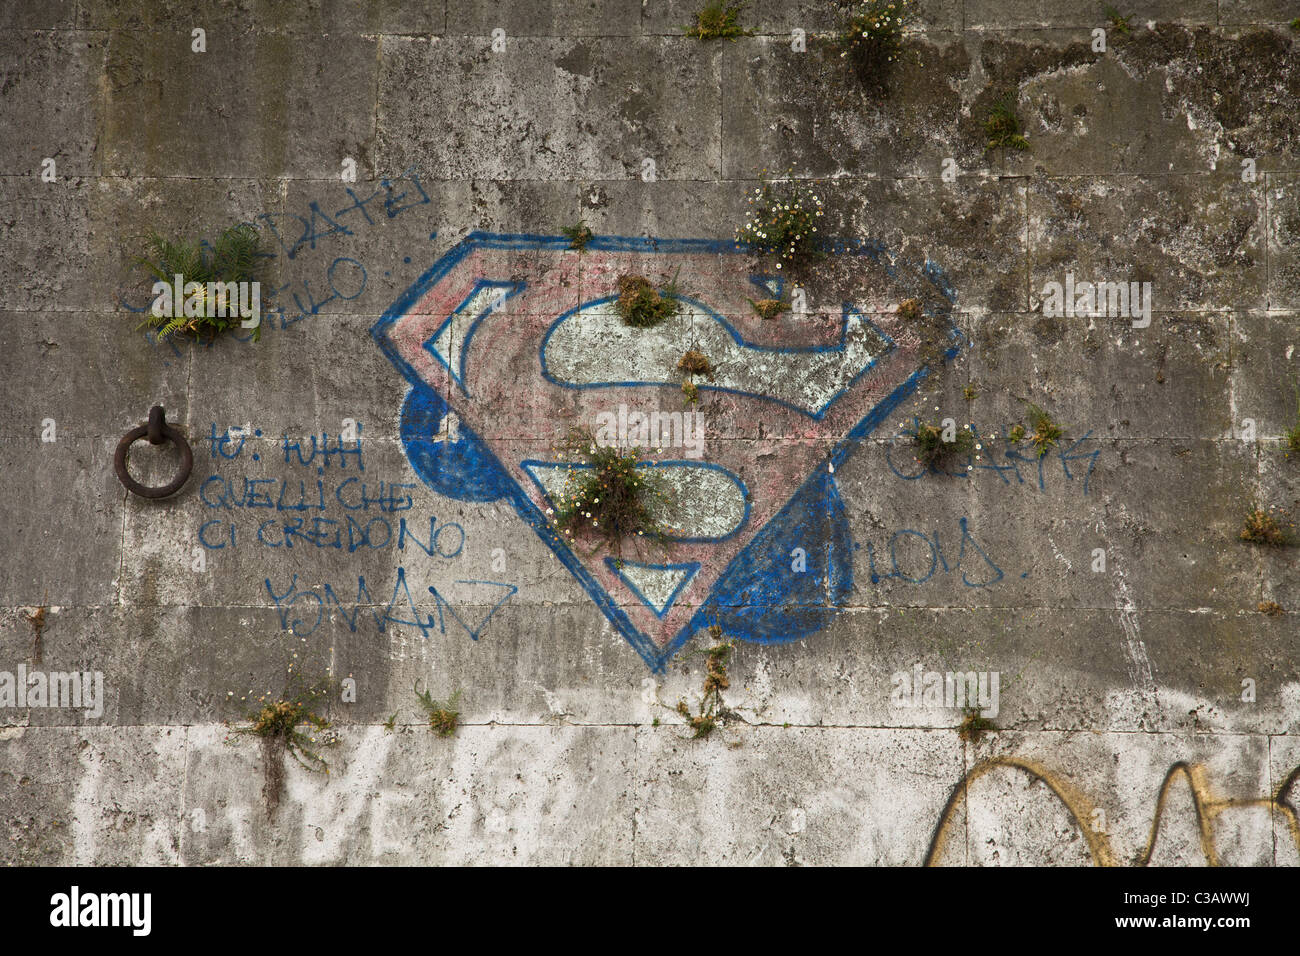 Superman graffiti logo on a urban wall Stock Photo